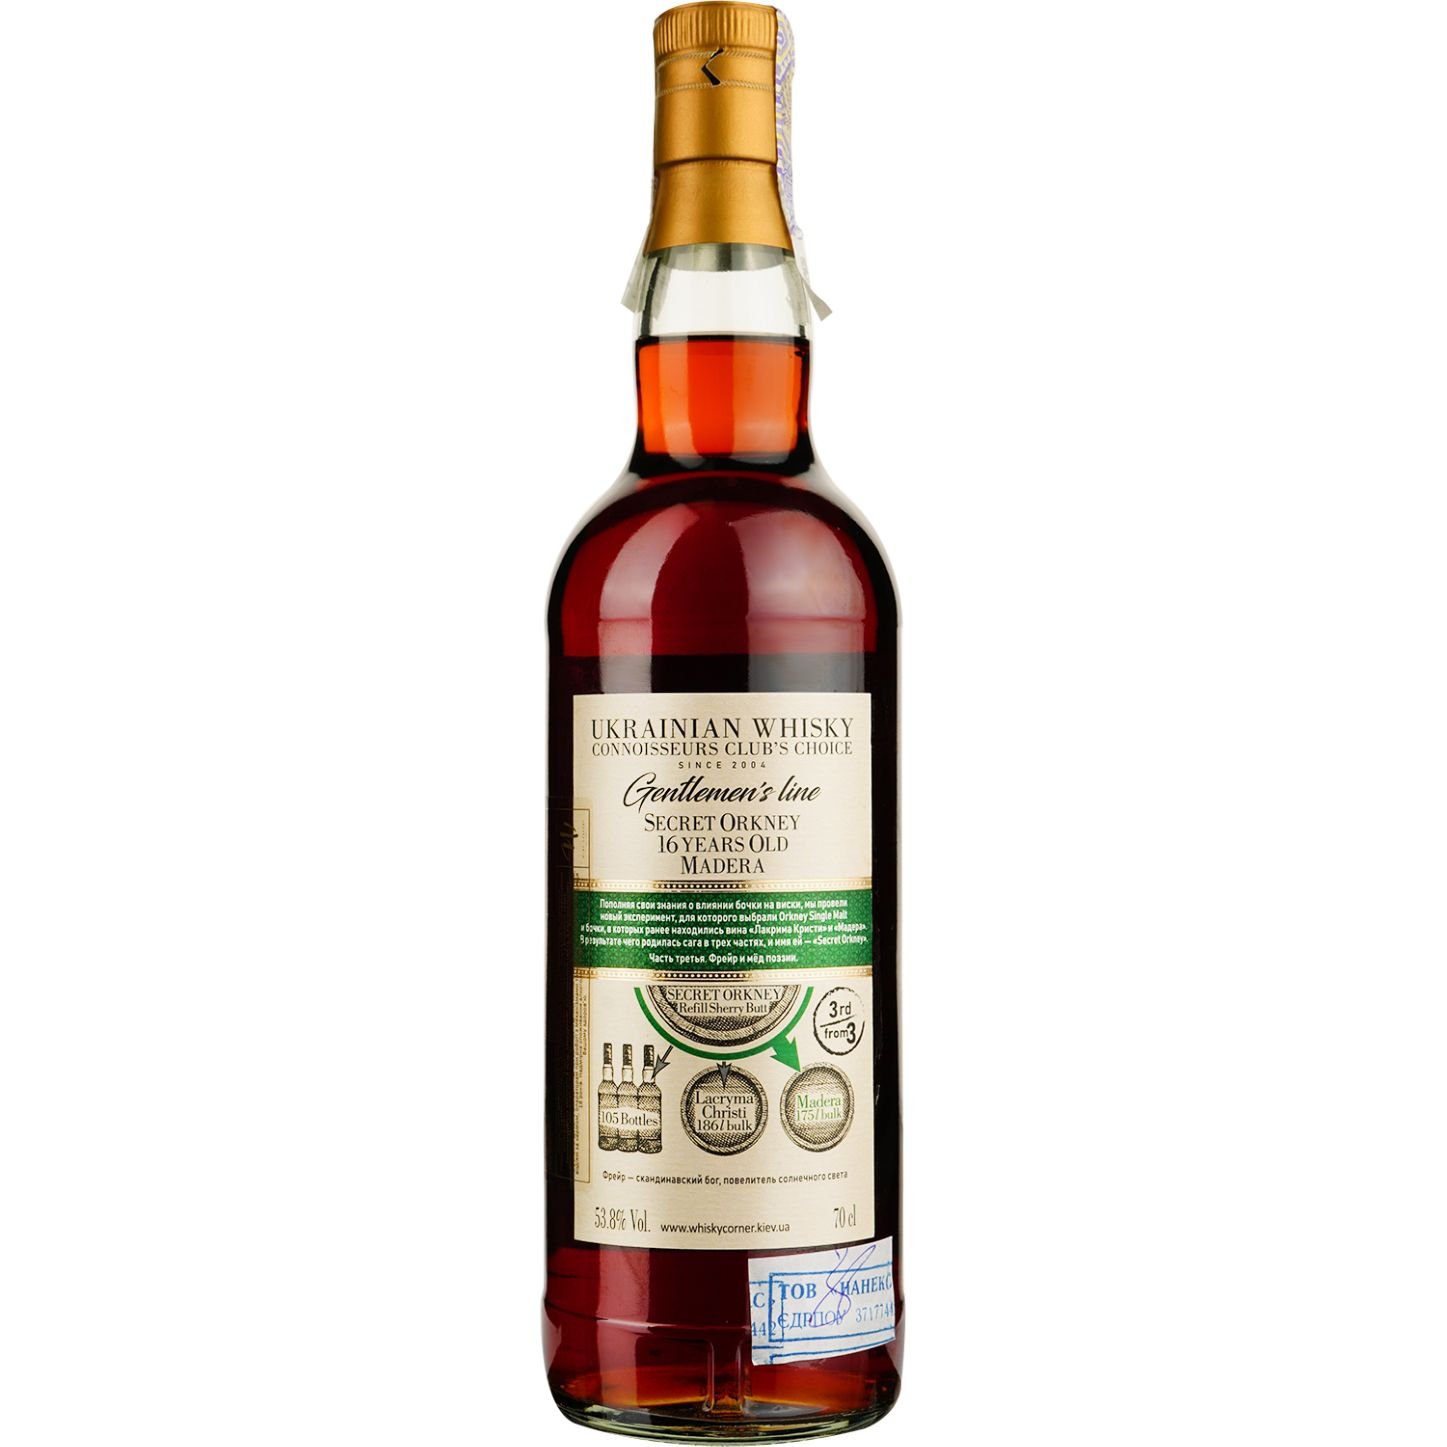 Виски Secret Orkney 16 Years Old Madera Single Malt Scotch Whisky, в подарочной упаковке, 53,8%, 0,7 л - фото 4